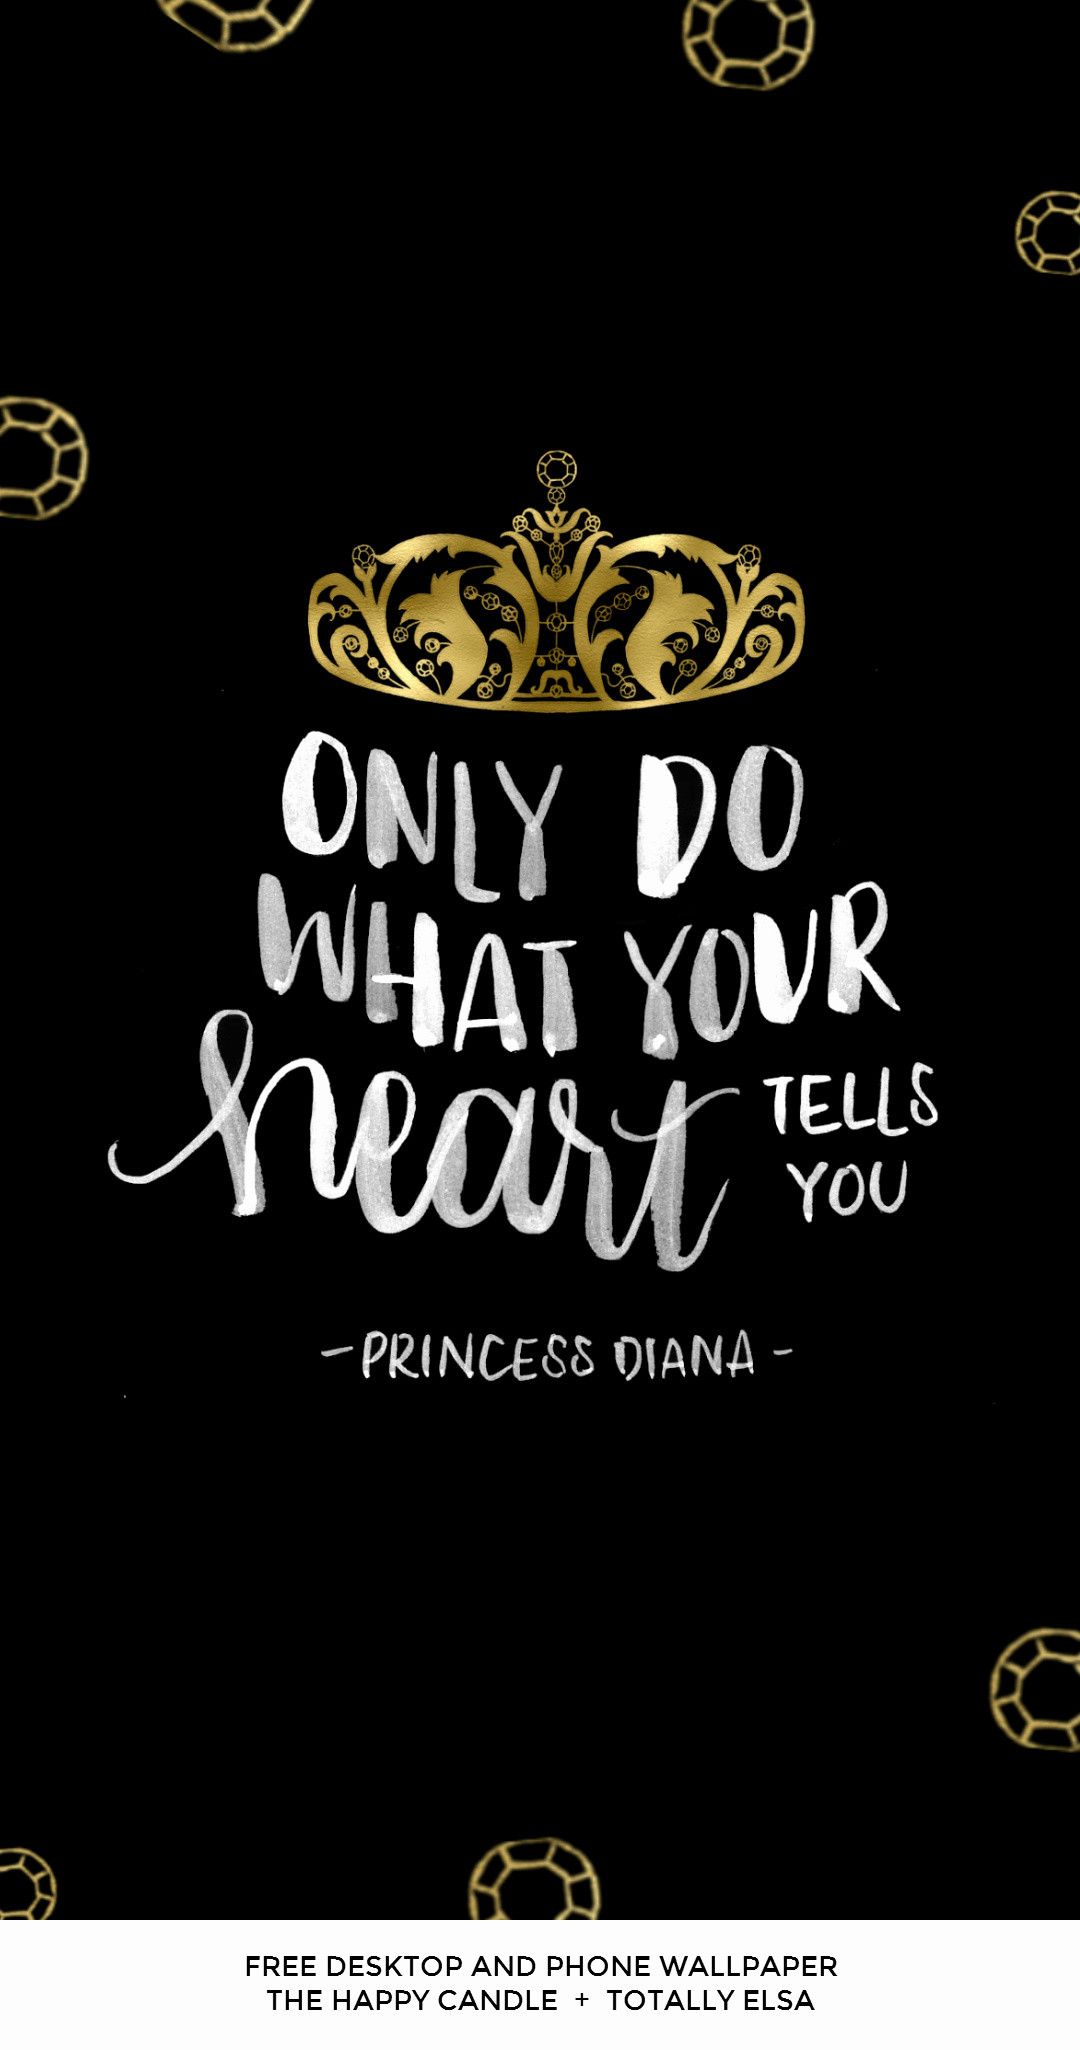 Princess Quotes Wallpapers